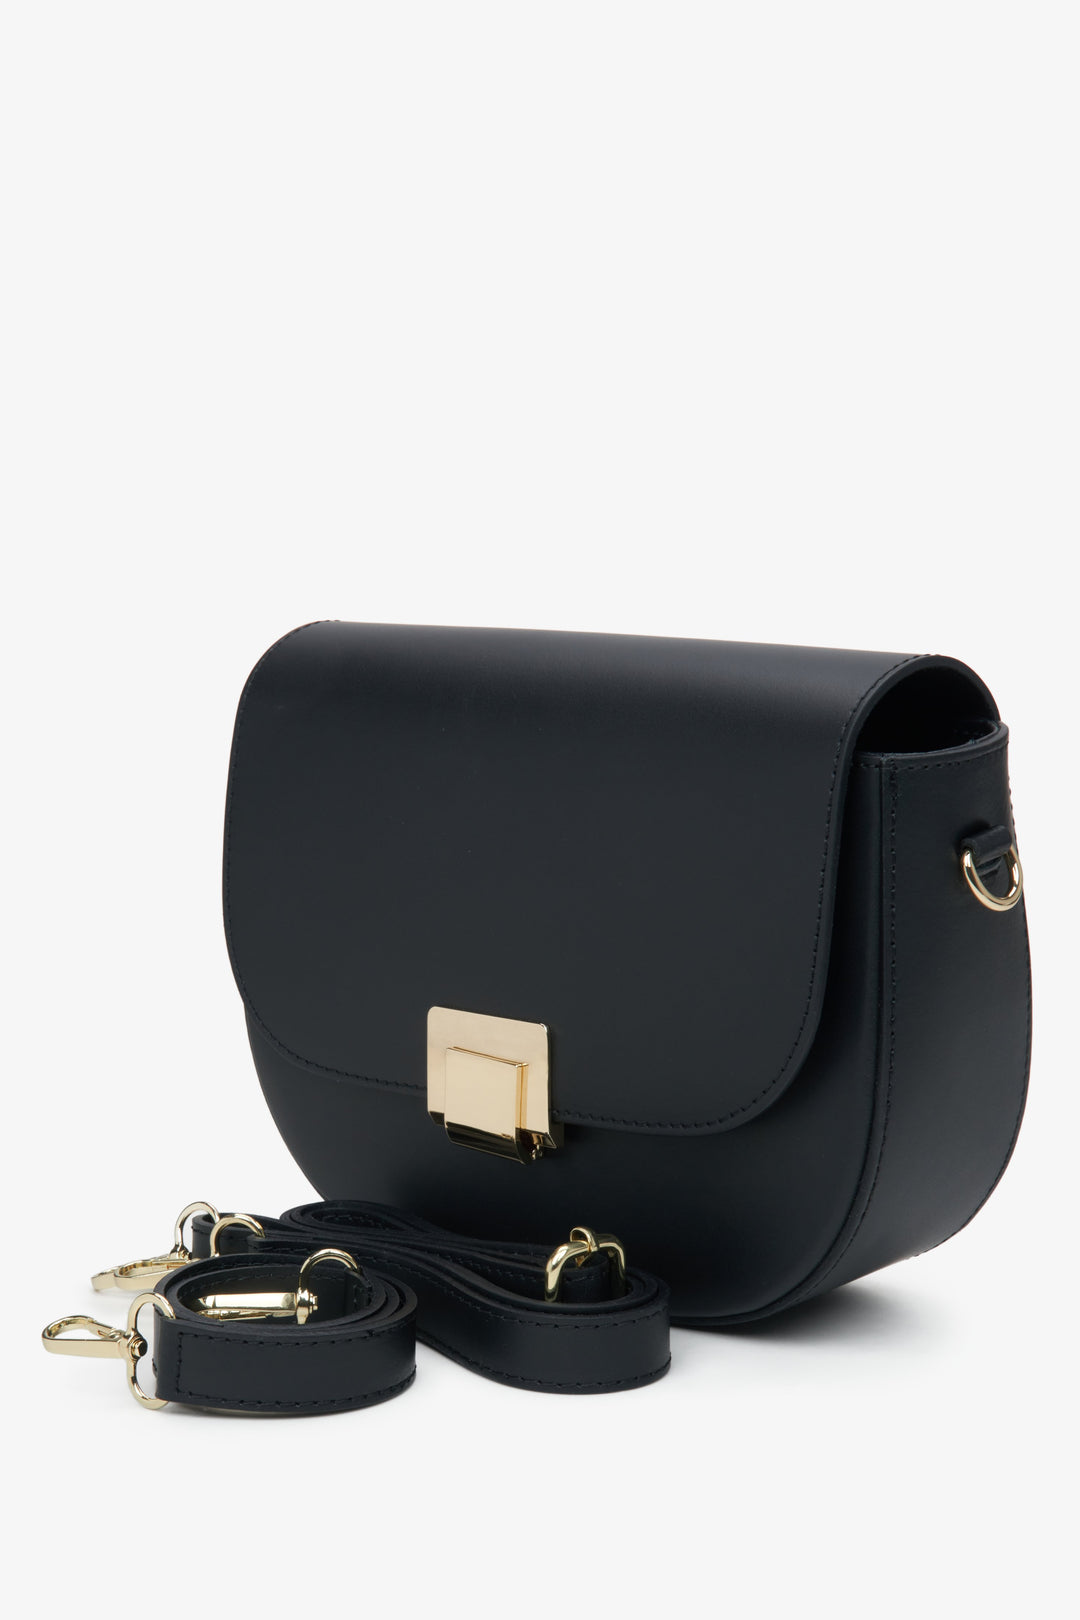 Estro women's black  leather handbag with an adjustable strap.